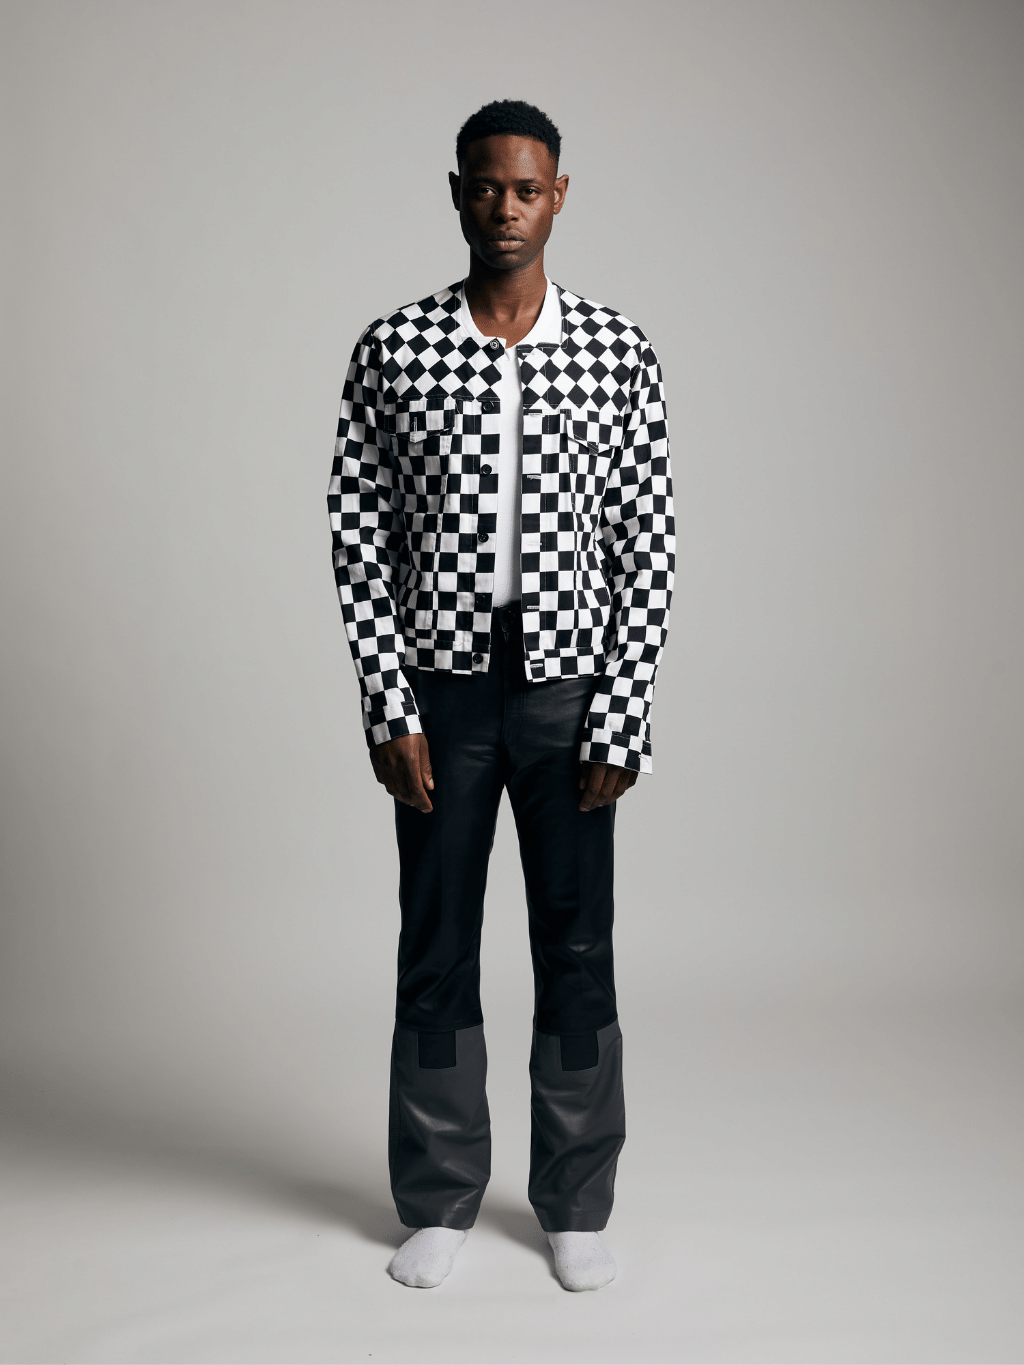 RSN Denim Jacket - Black and White Square Pattern